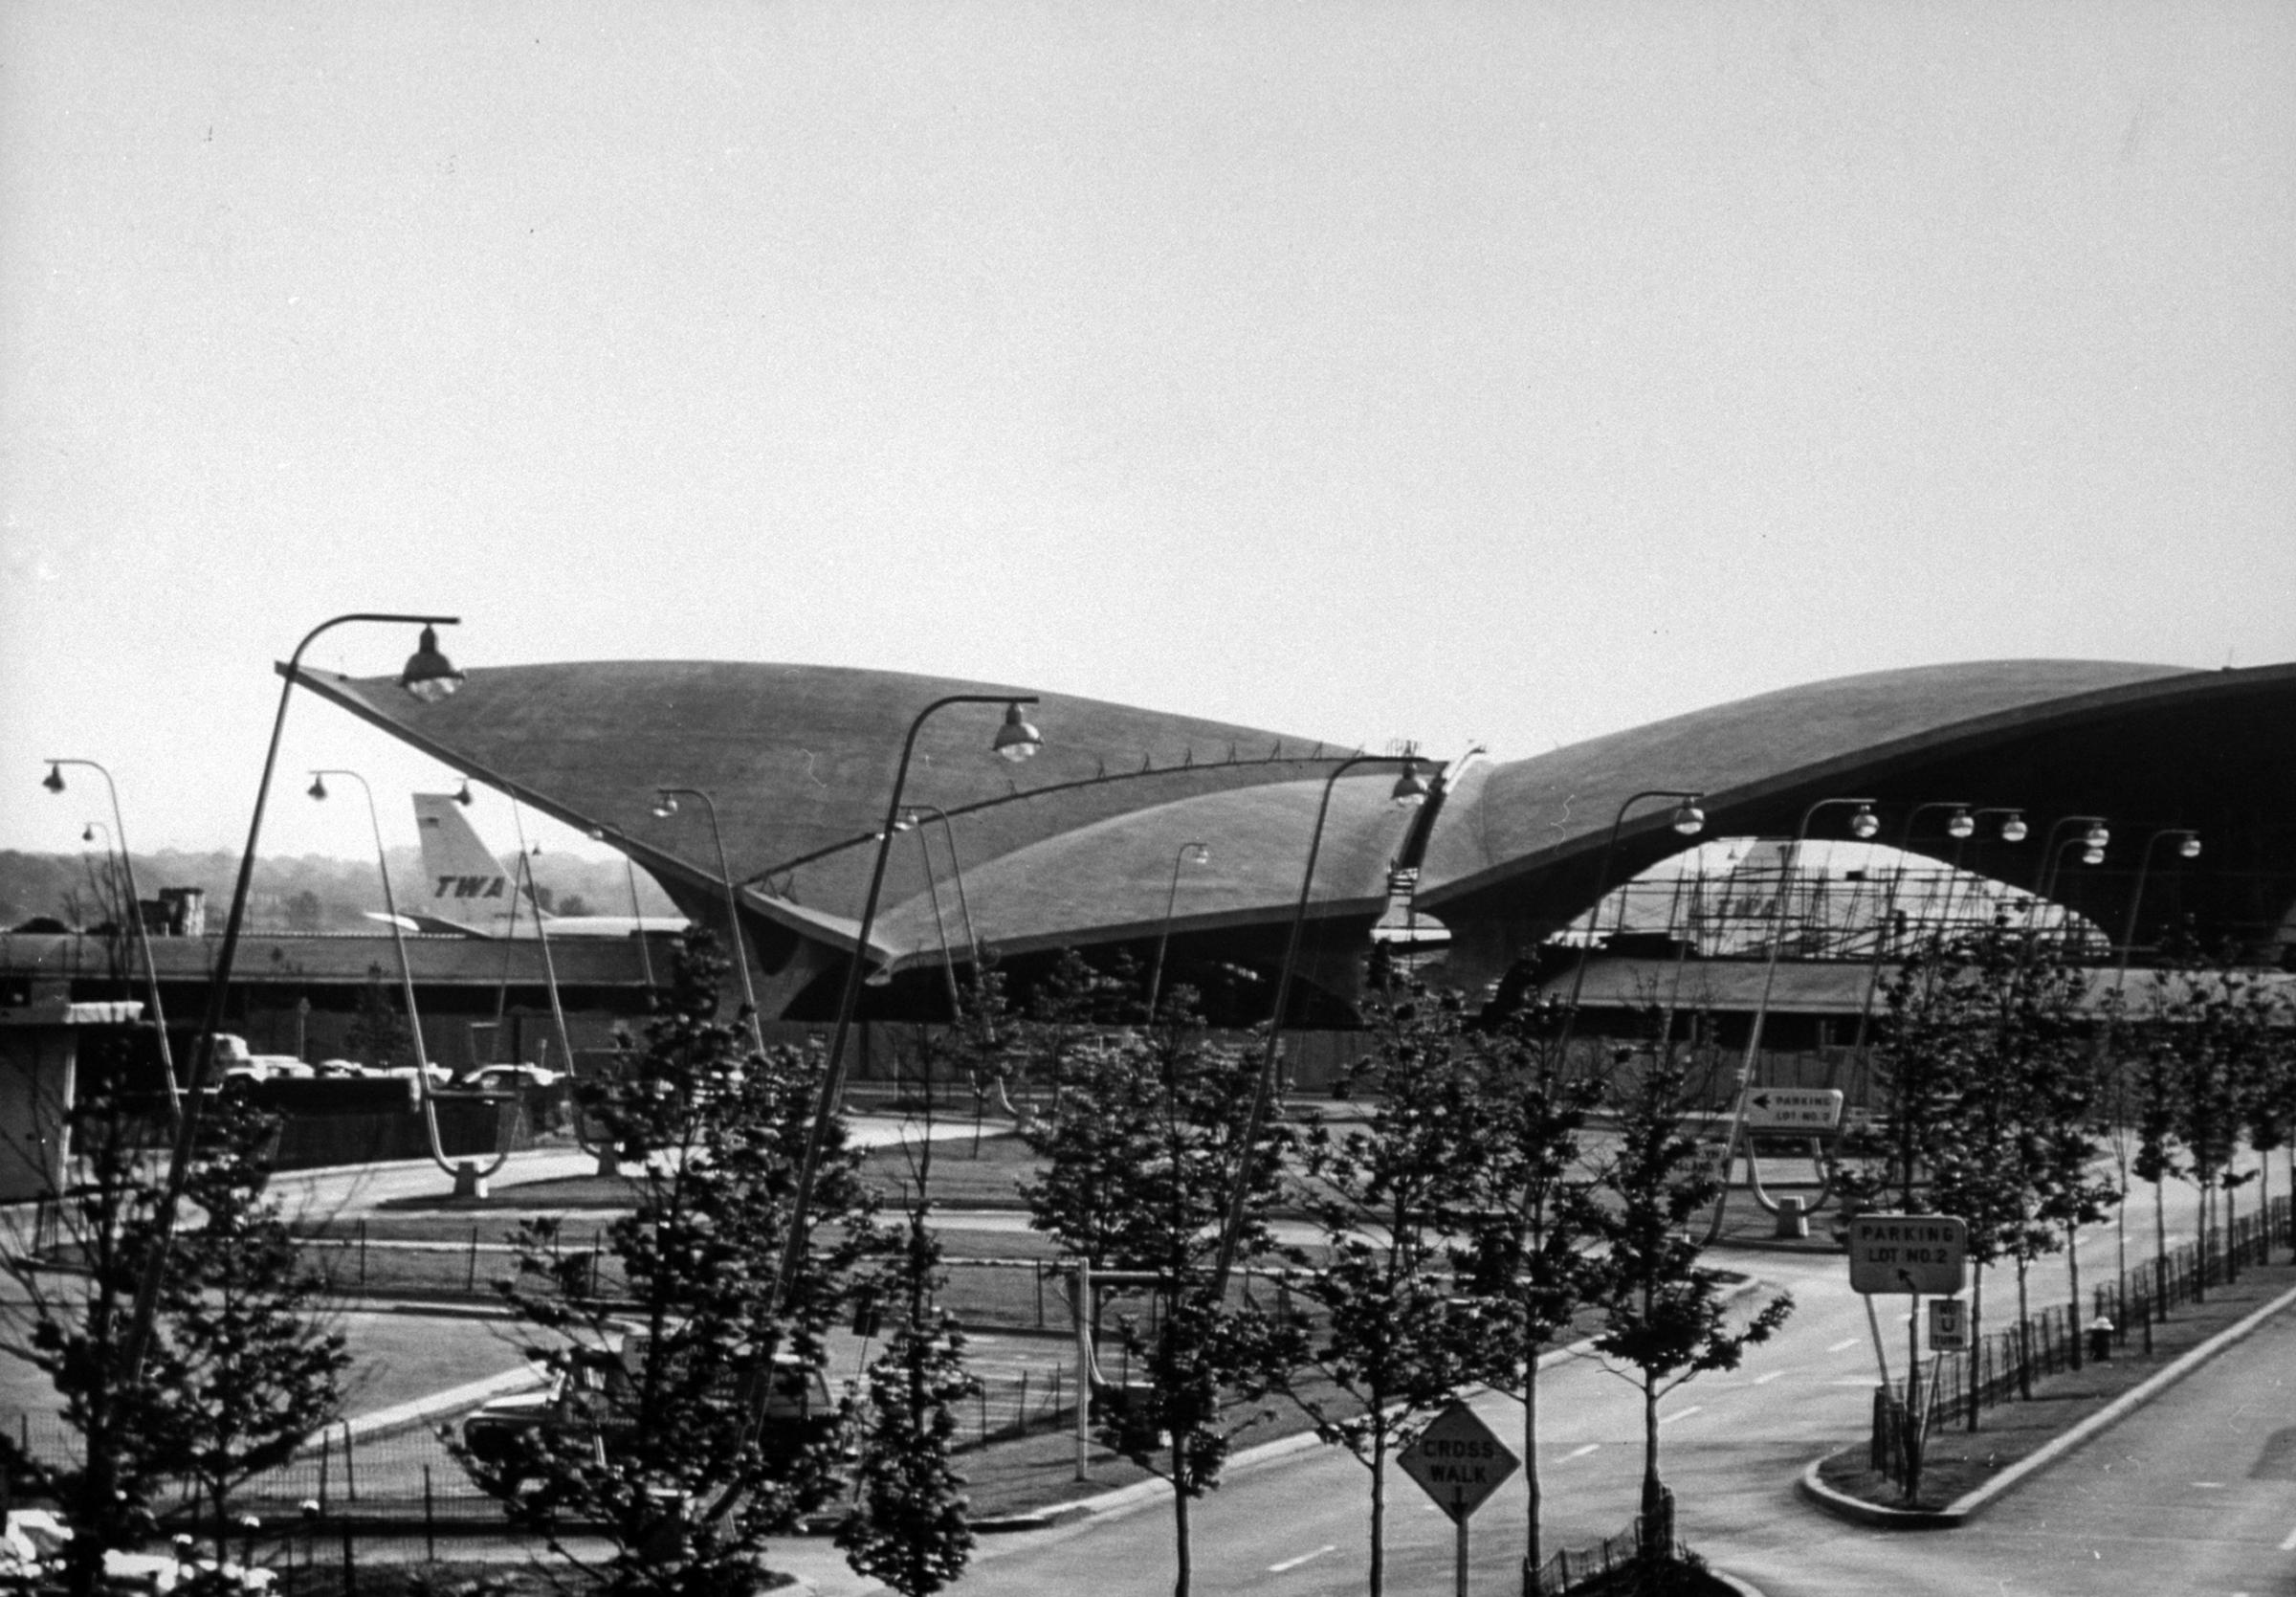 The TWA terminal, designed by Eero Saarinen, 1961.